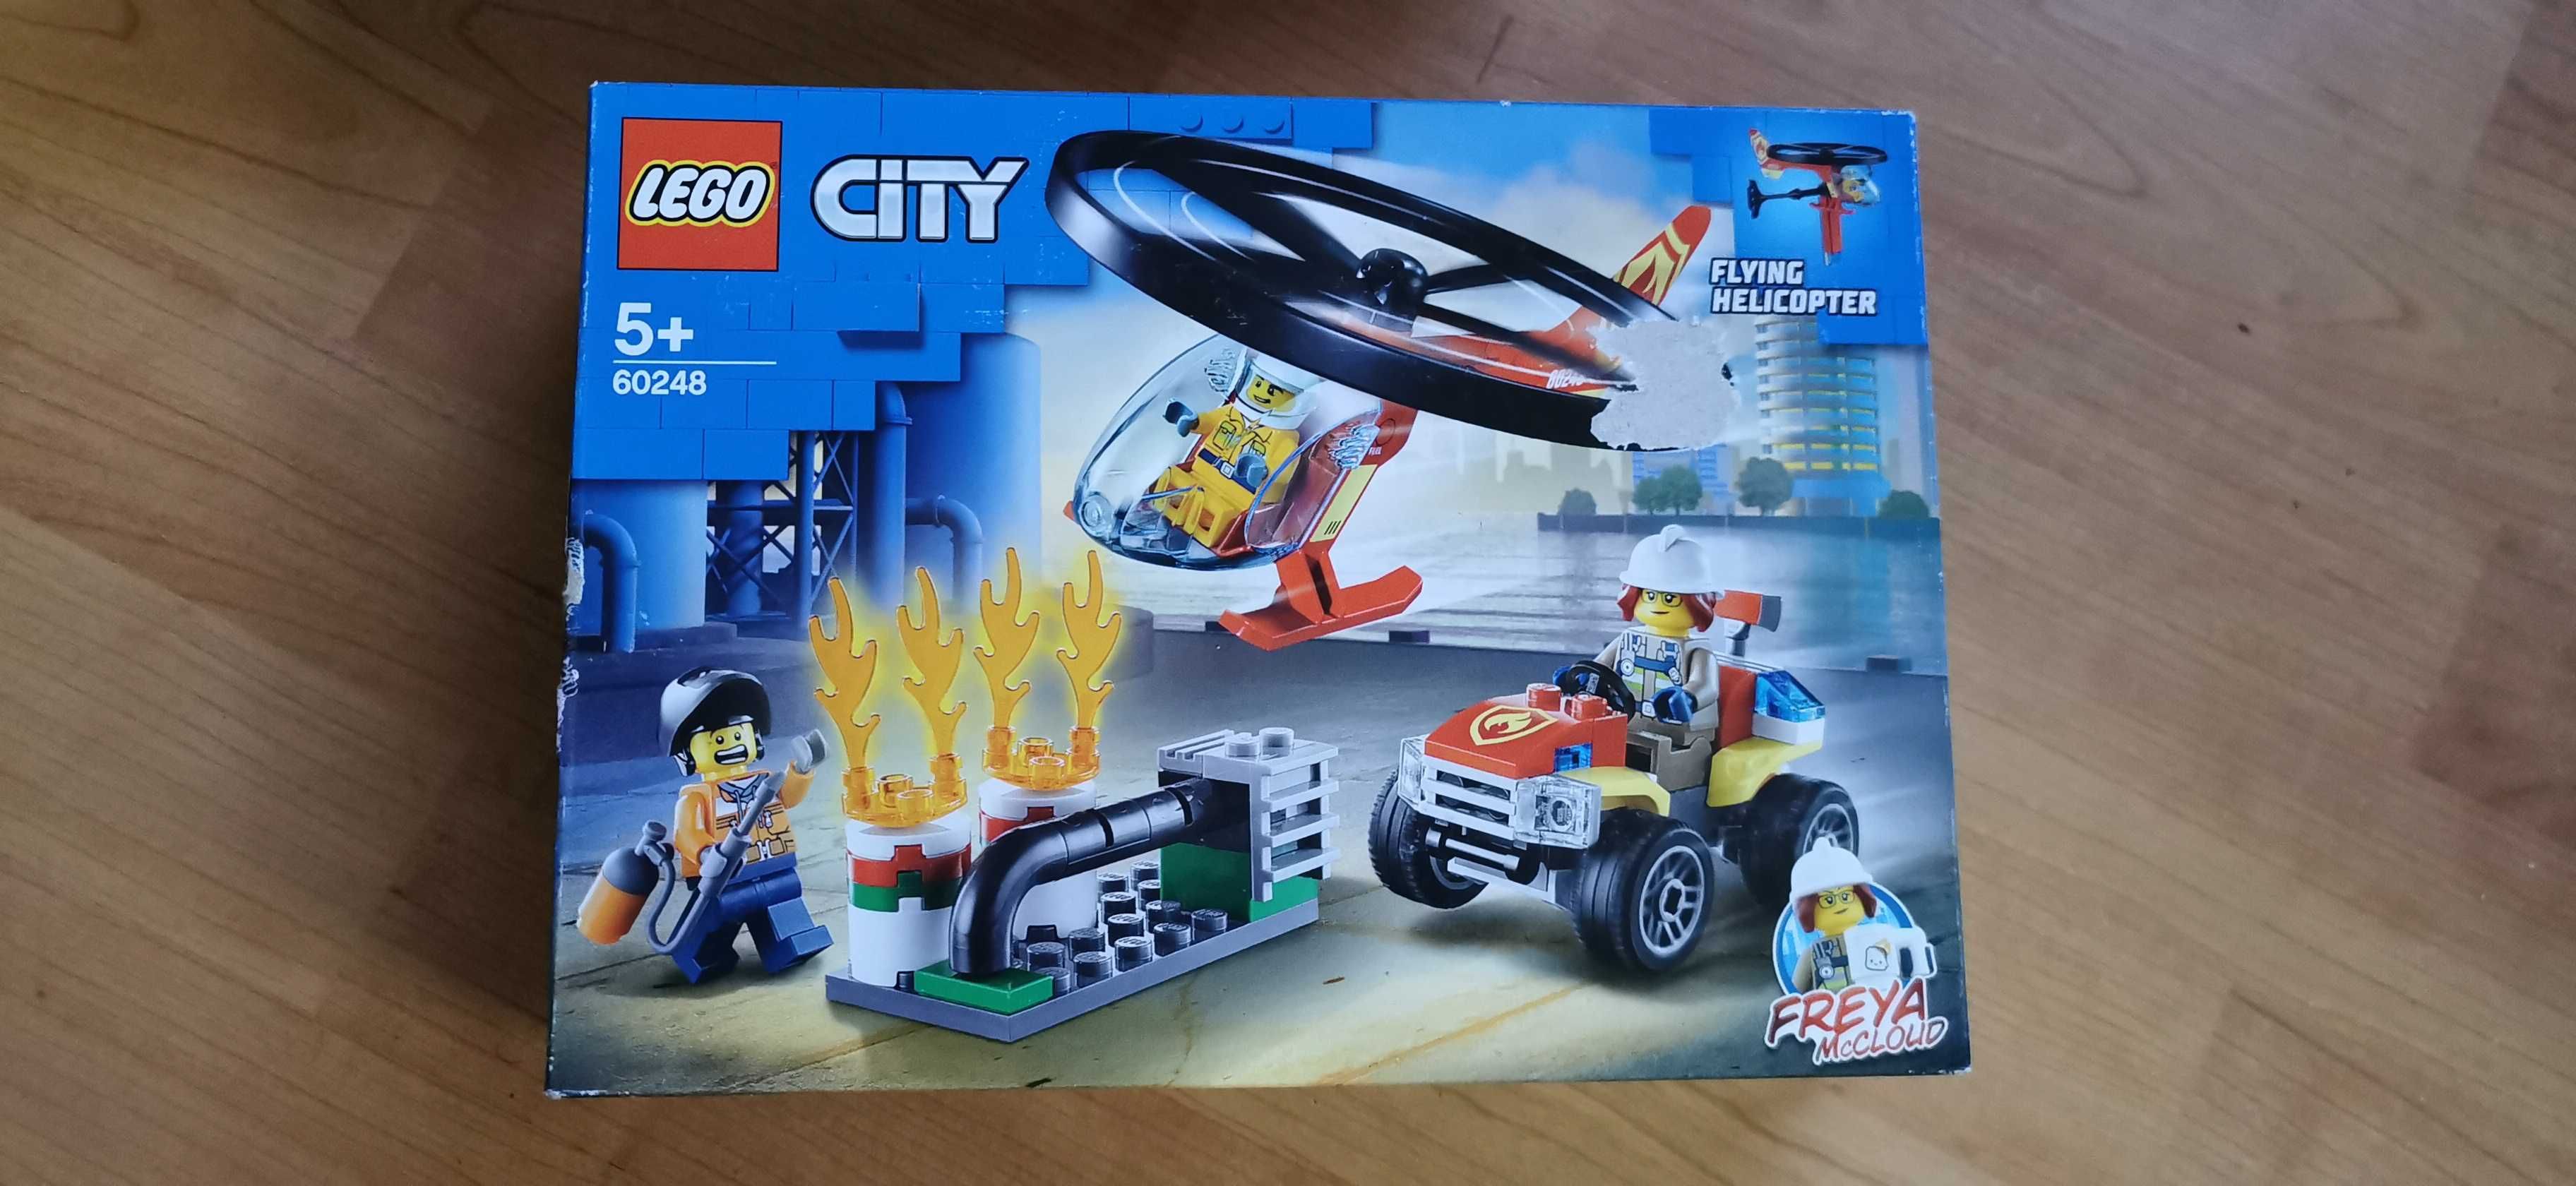 LEGO City Fire - LEGO hidden side